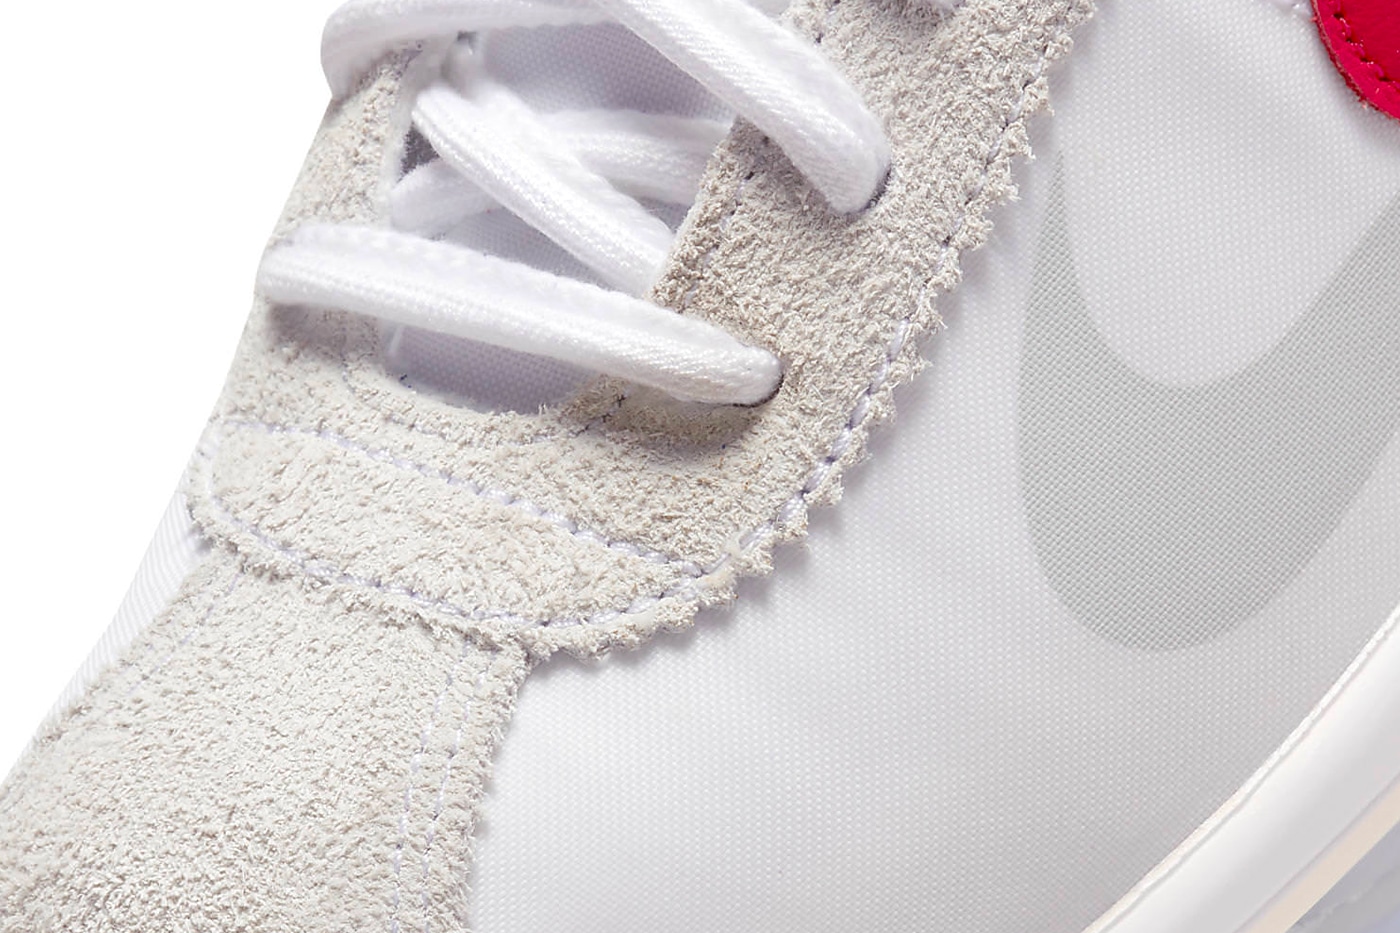 sacai x Nike Cortez 4.0 "OG" releasedatum